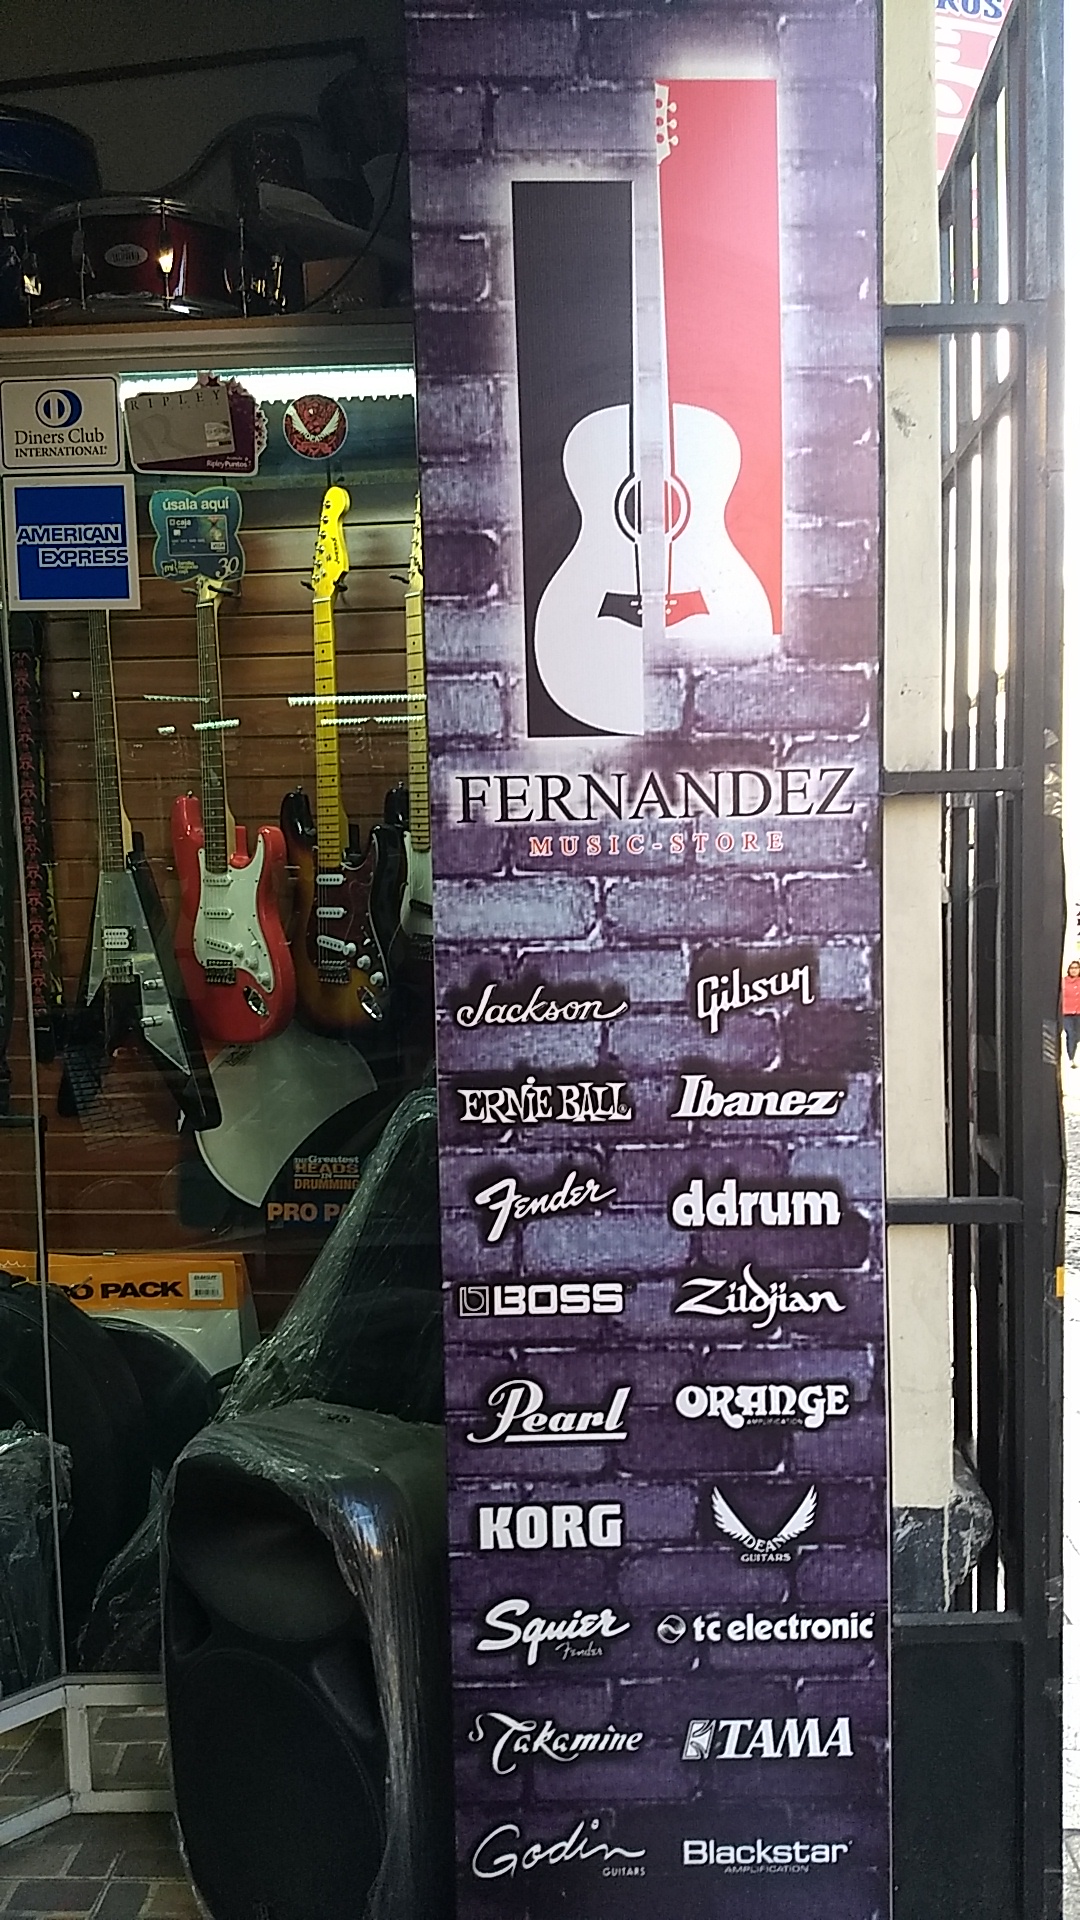 Fernandez Music Store